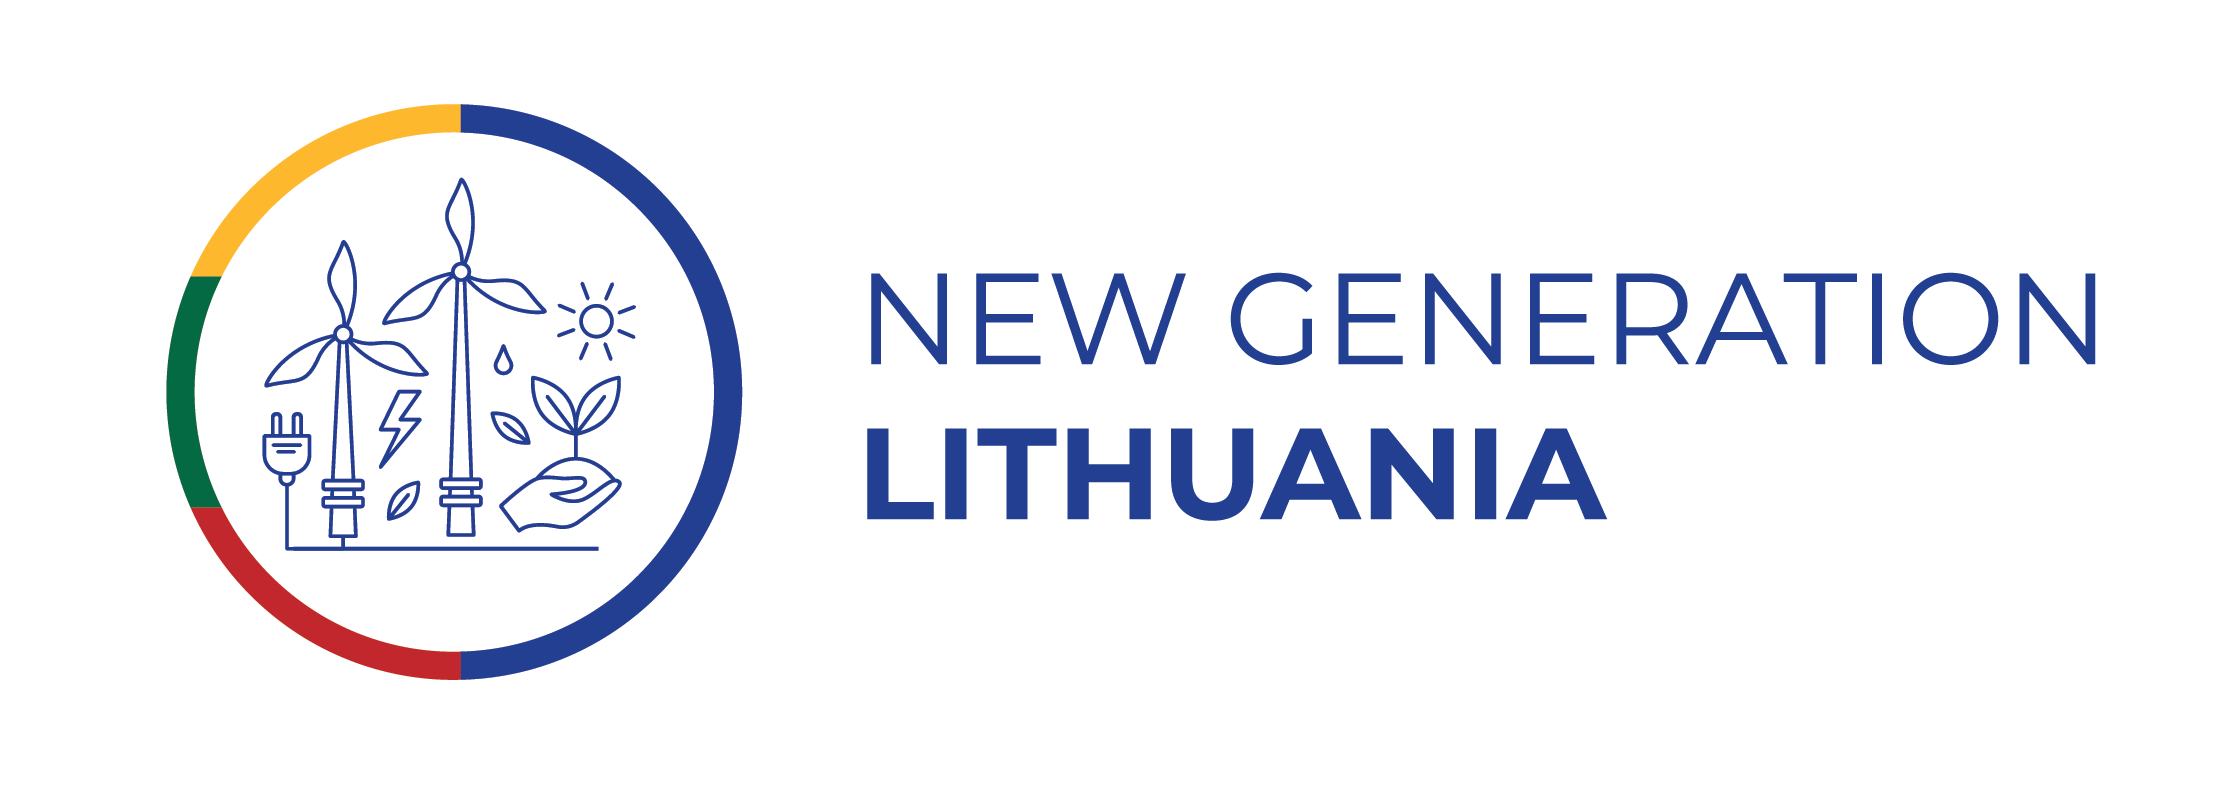 new generation Lithuania logo